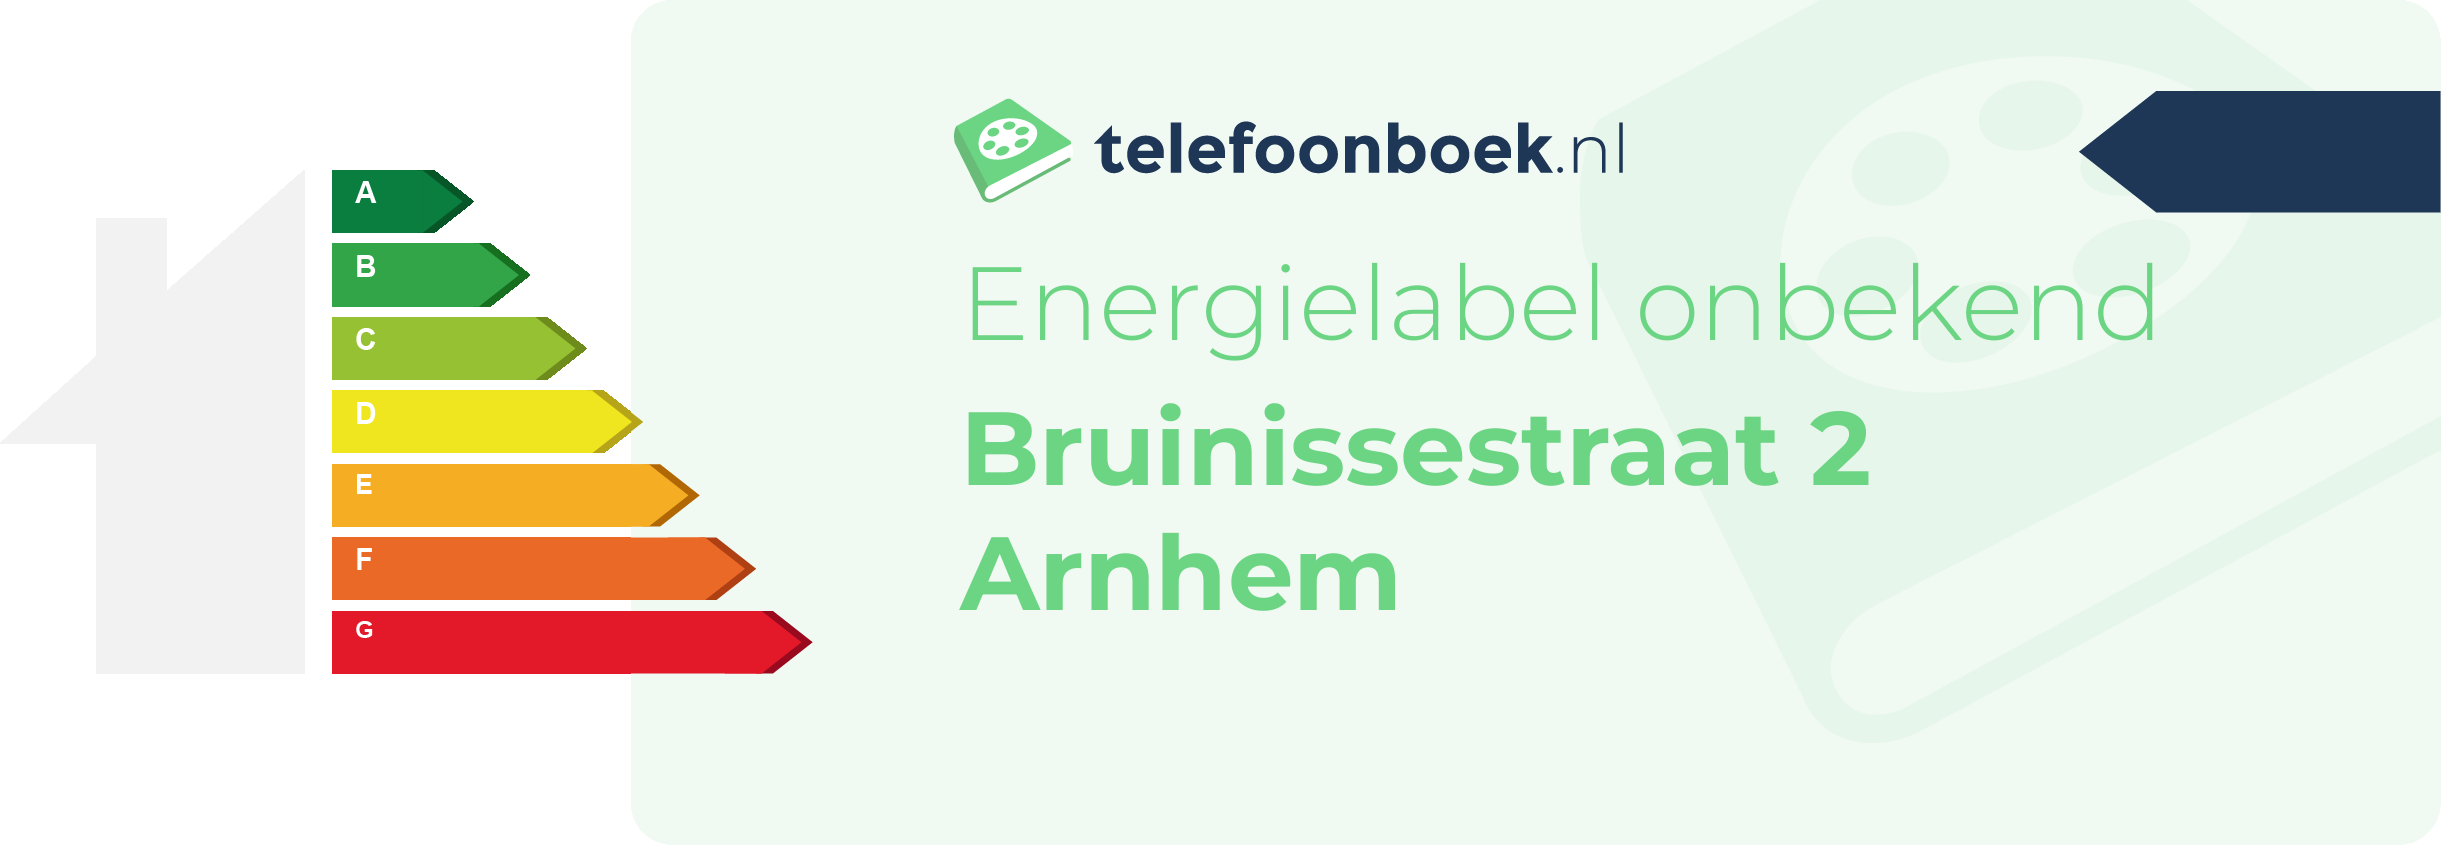 Energielabel Bruinissestraat 2 Arnhem